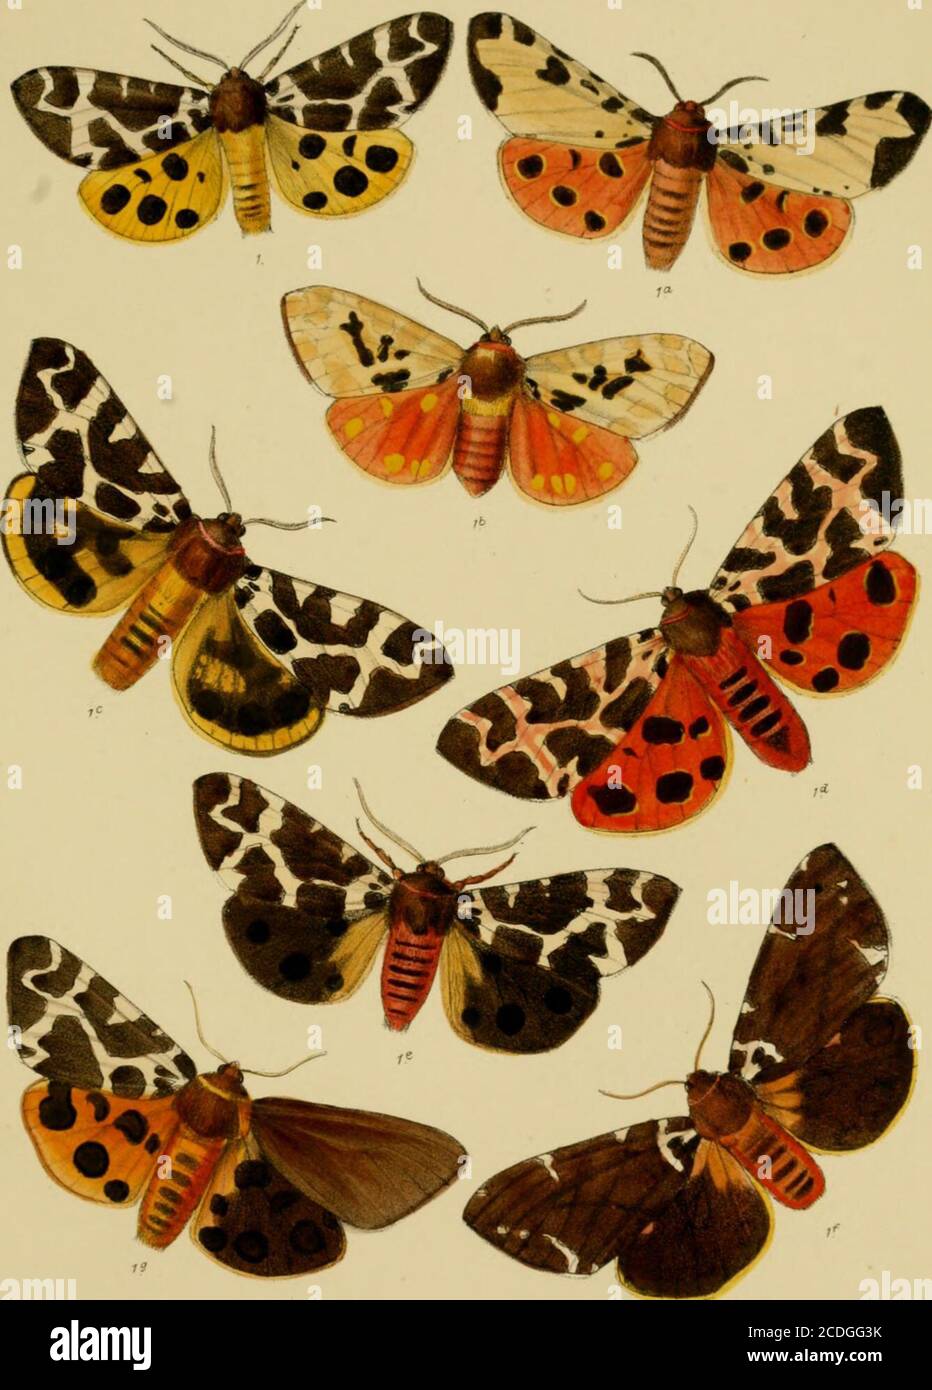 . The Lepidoptera of the British Islands : a descriptive account of the families, genera, and species indigenous to Great Britain and Ireland, their preparatory states, habits, and localities . RMoT^an-AoLetlitK ?^Snc«nt BrooUsDayiSorJinp L Reeve &. C9 Lffixdon. PLATE LXXIL Fig. 1. Arctia caja var. Dr. Mason. la. jj „ Mr. S. Webb. Ih. 55 „ Mr. C. A. Briggs Ic. 55 „ Mr. ?. Webb. Id. 55 55 5» le. 55 5) &gt;» 1/ 55 55 »&gt; 1^. 55 55 »» PLATE 72. B. Morgan del et litK ^Aru:«nt Broolo Day tc Sonimp X Rcar/n &. C XoTulan PLATE LXXIII. Fig. 1. Arctia villica, male. la. )! )5 female. Ih. )3 ?3 male, Stock Photo